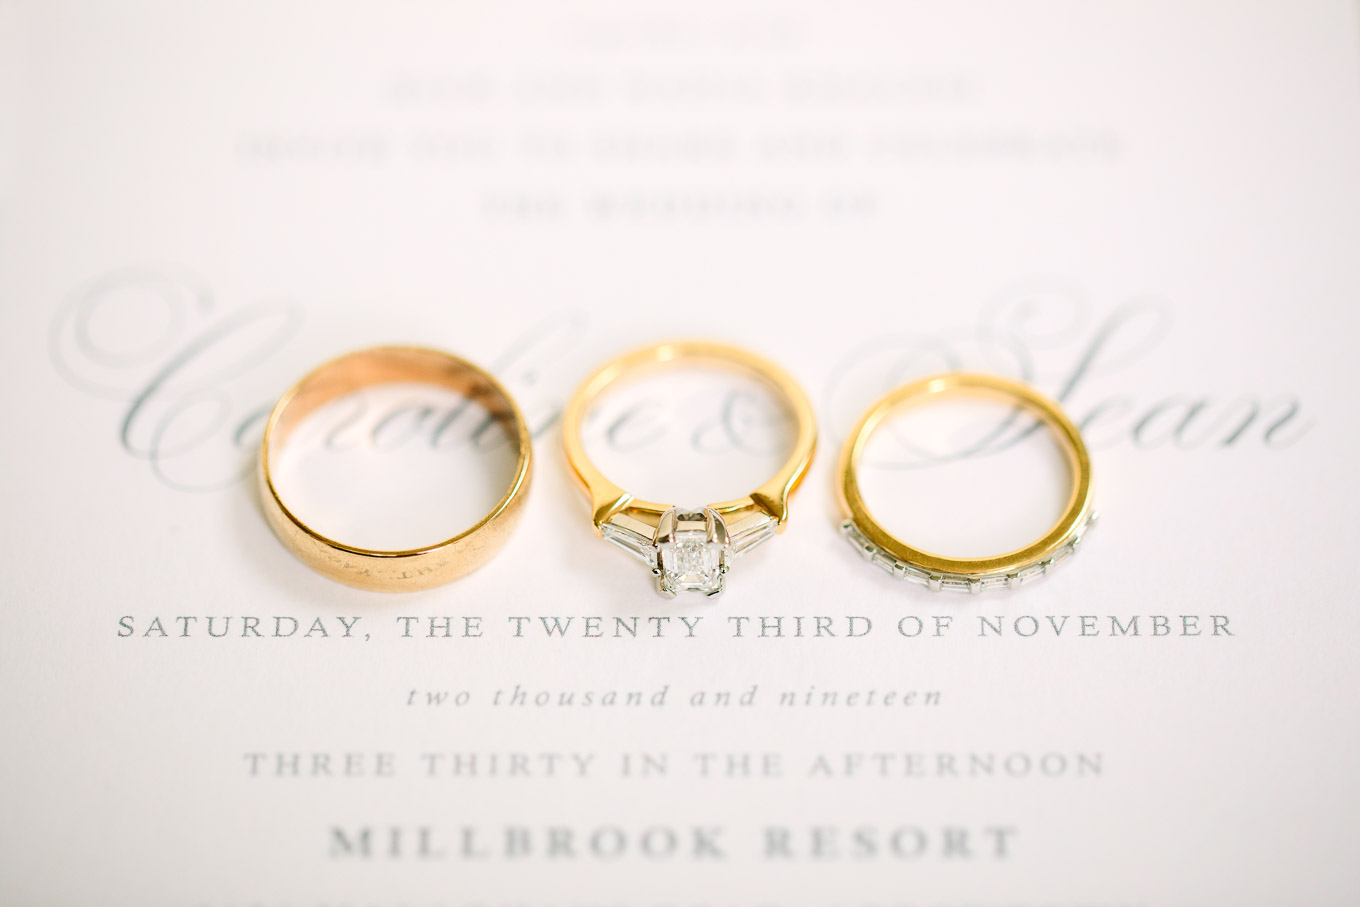 Gold and diamond wedding rings on wedding invitation. Millbrook Resort Queenstown New Zealand wedding by Mary Costa Photography | www.marycostaweddings.com